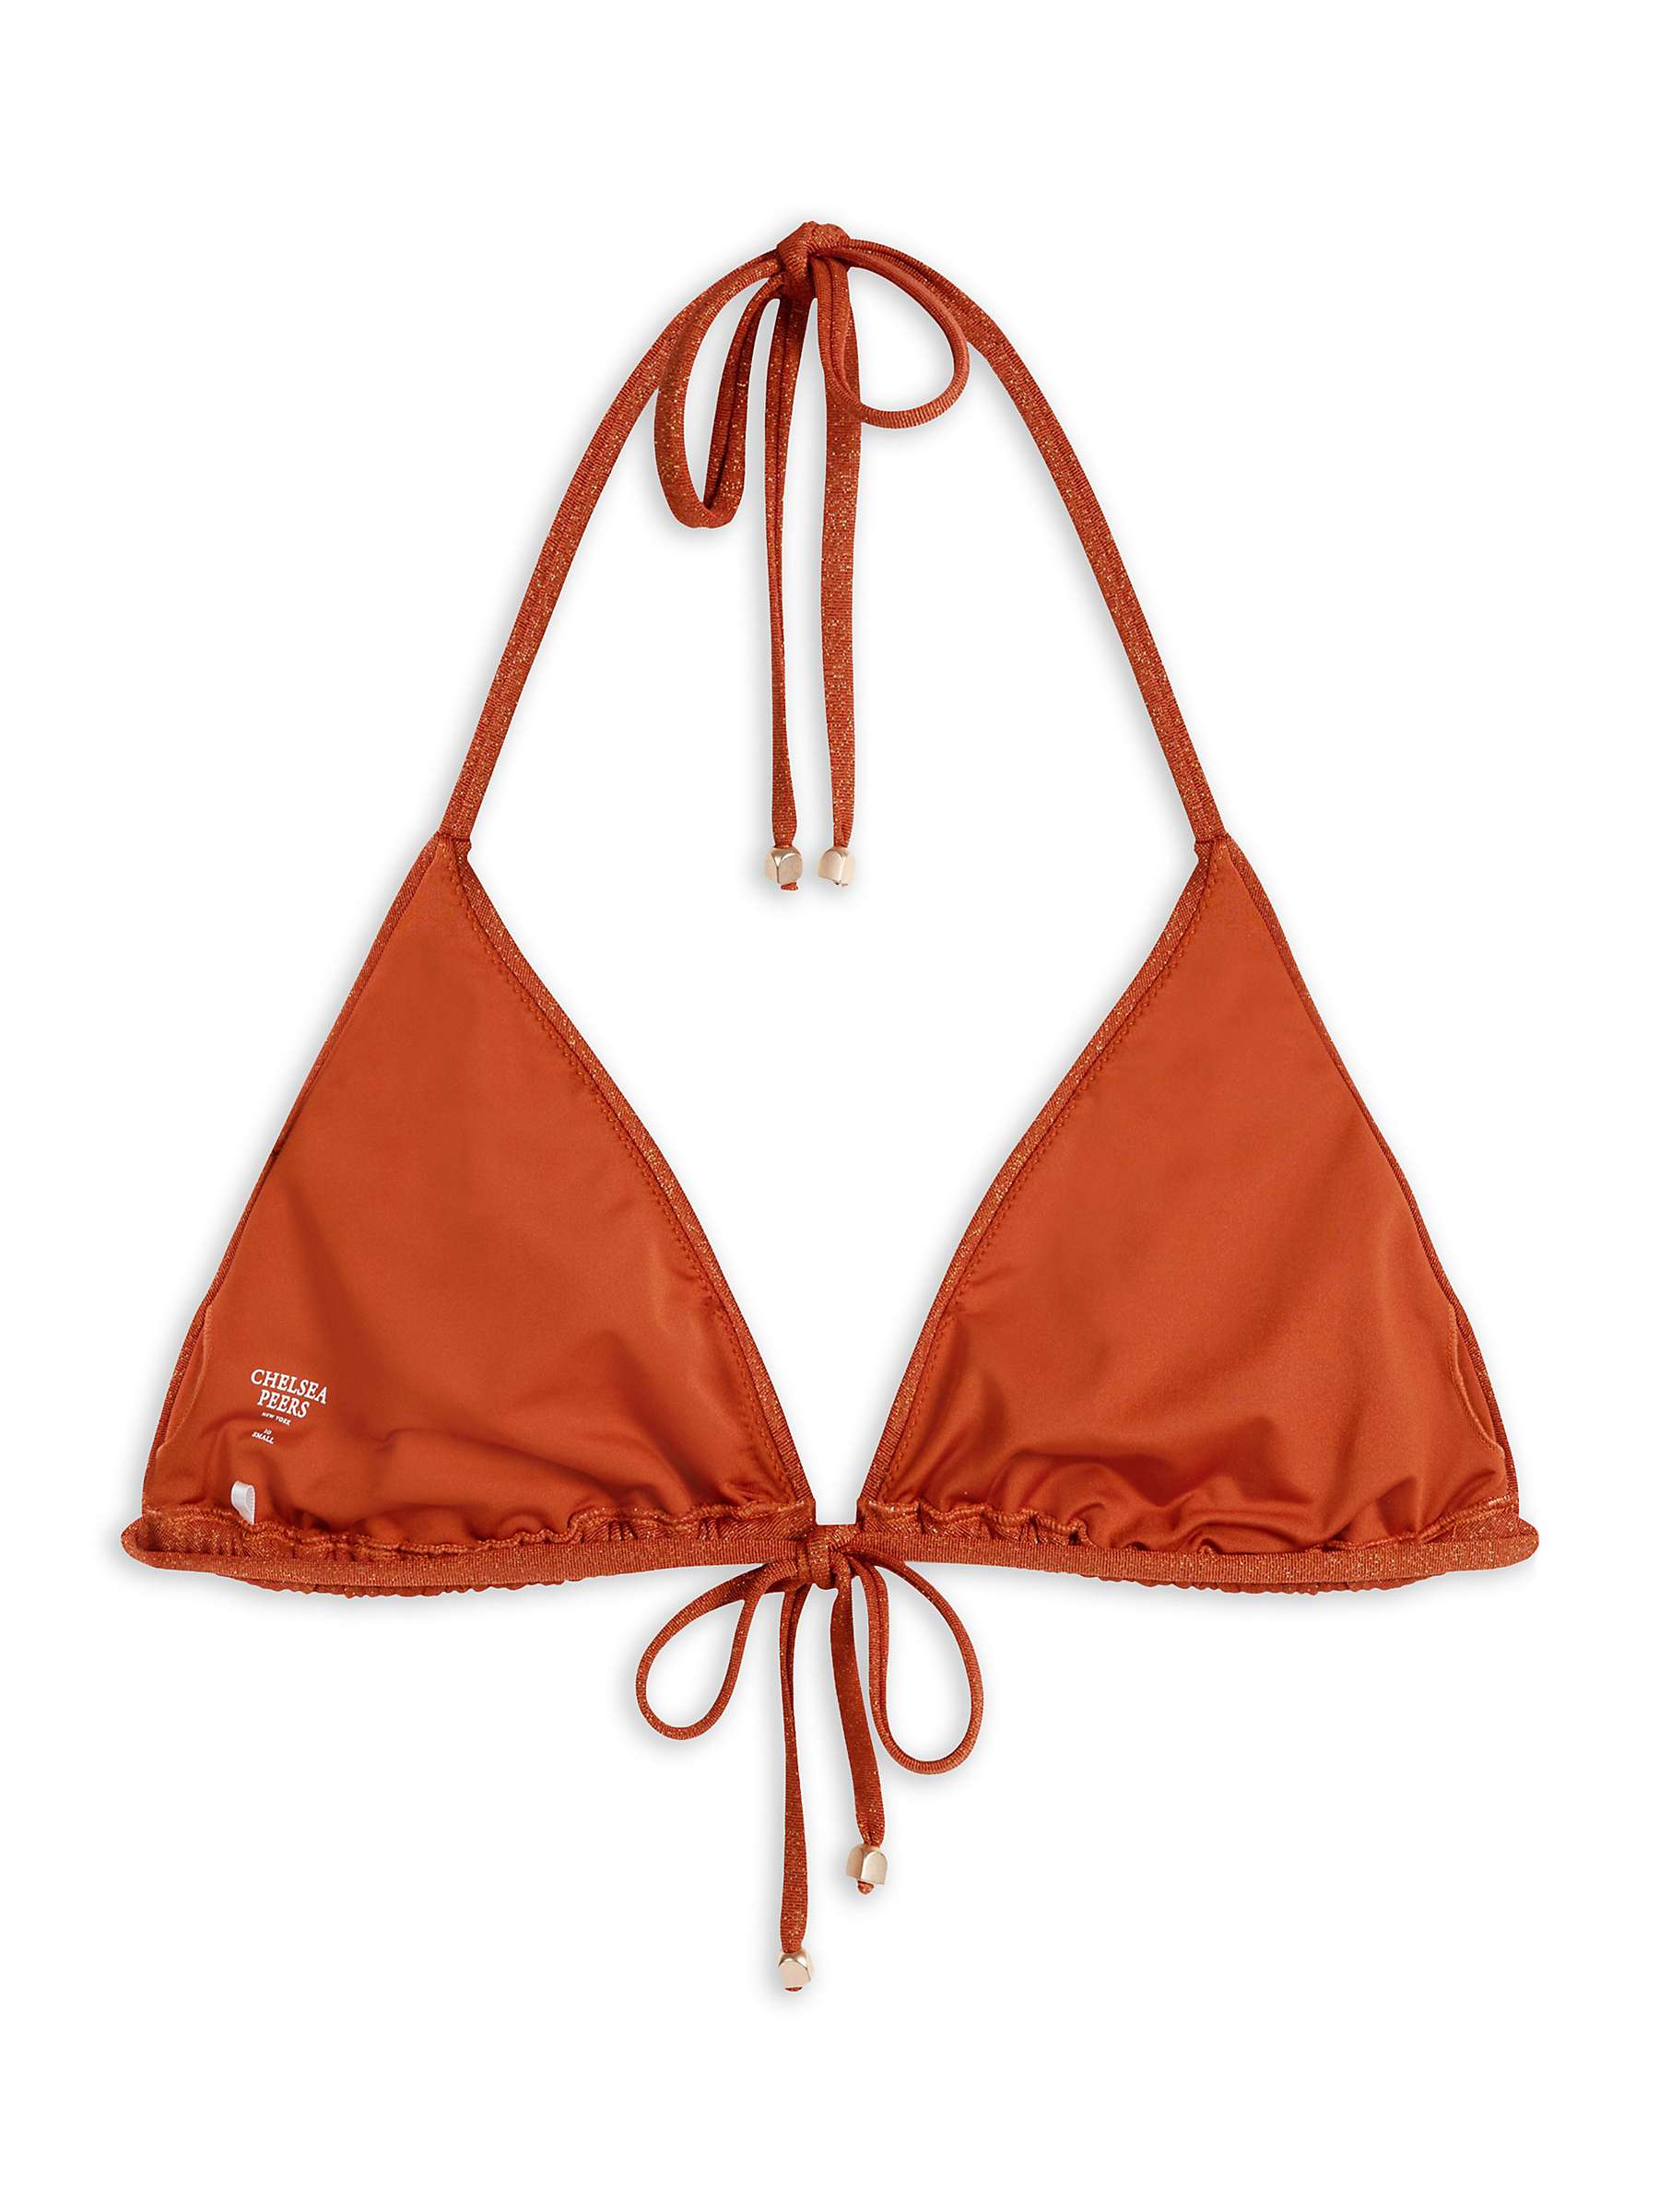 Buy Chelsea Peers Metallic Triangle Bikini Top, Bronze Online at johnlewis.com